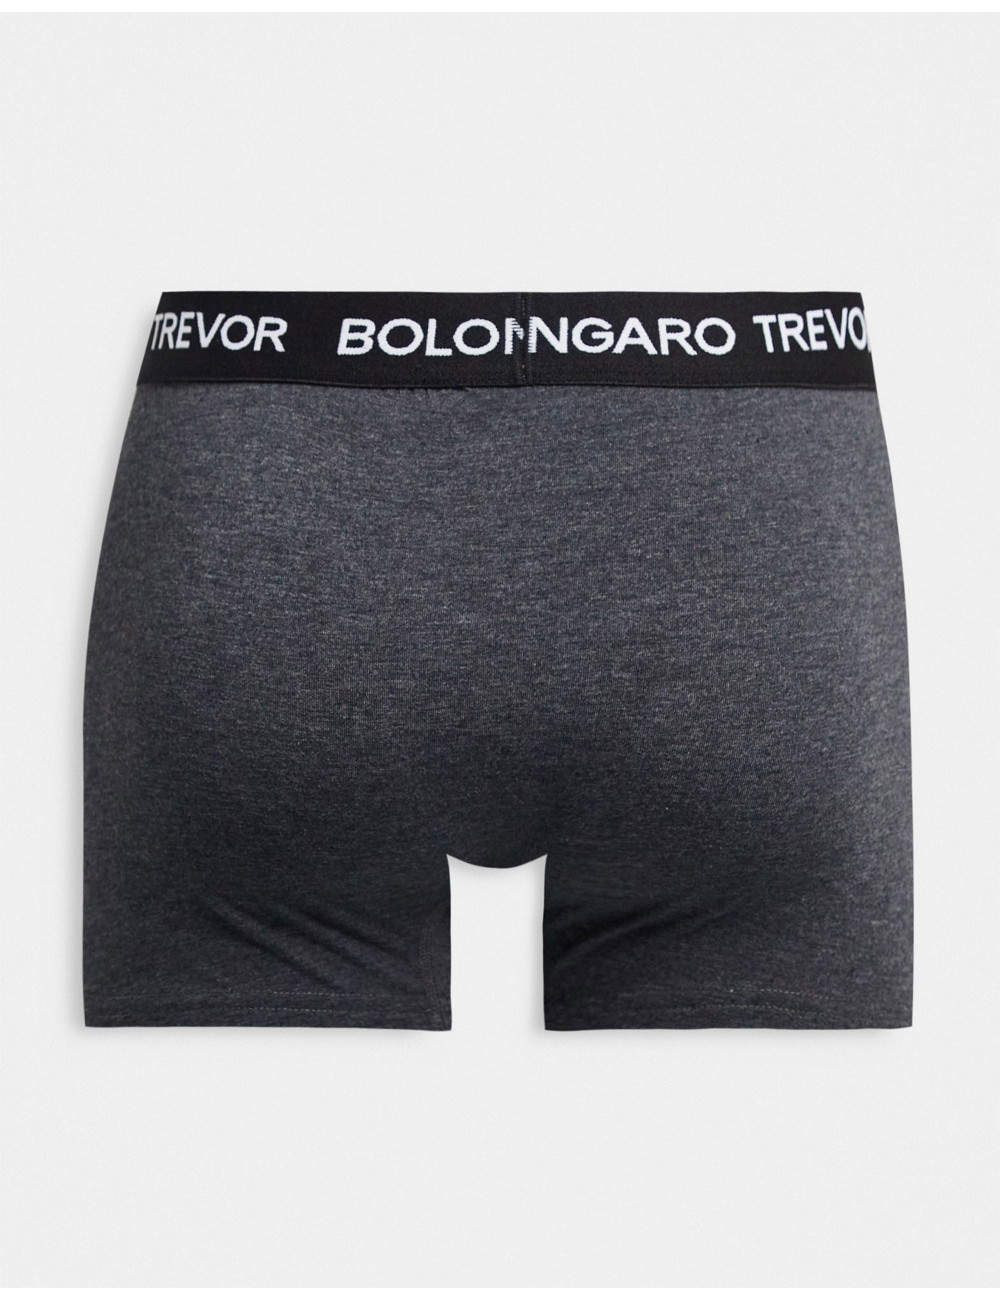 Bolongaro Trevor boxer...